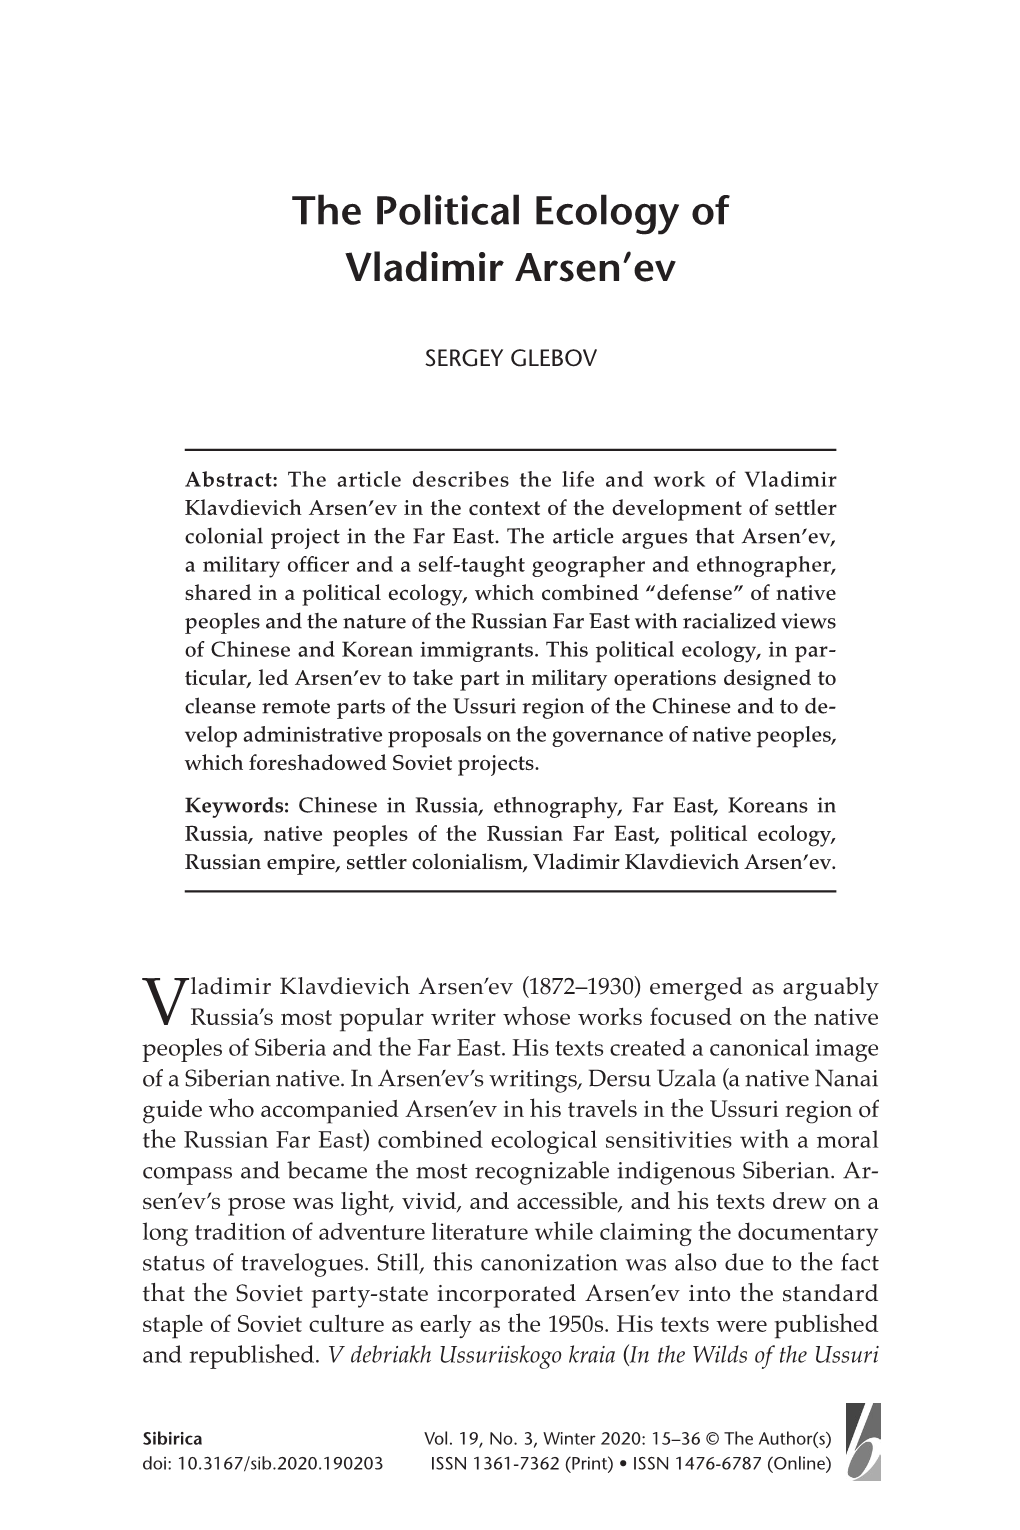 The Political Ecology of Vladimir Arsen'ev